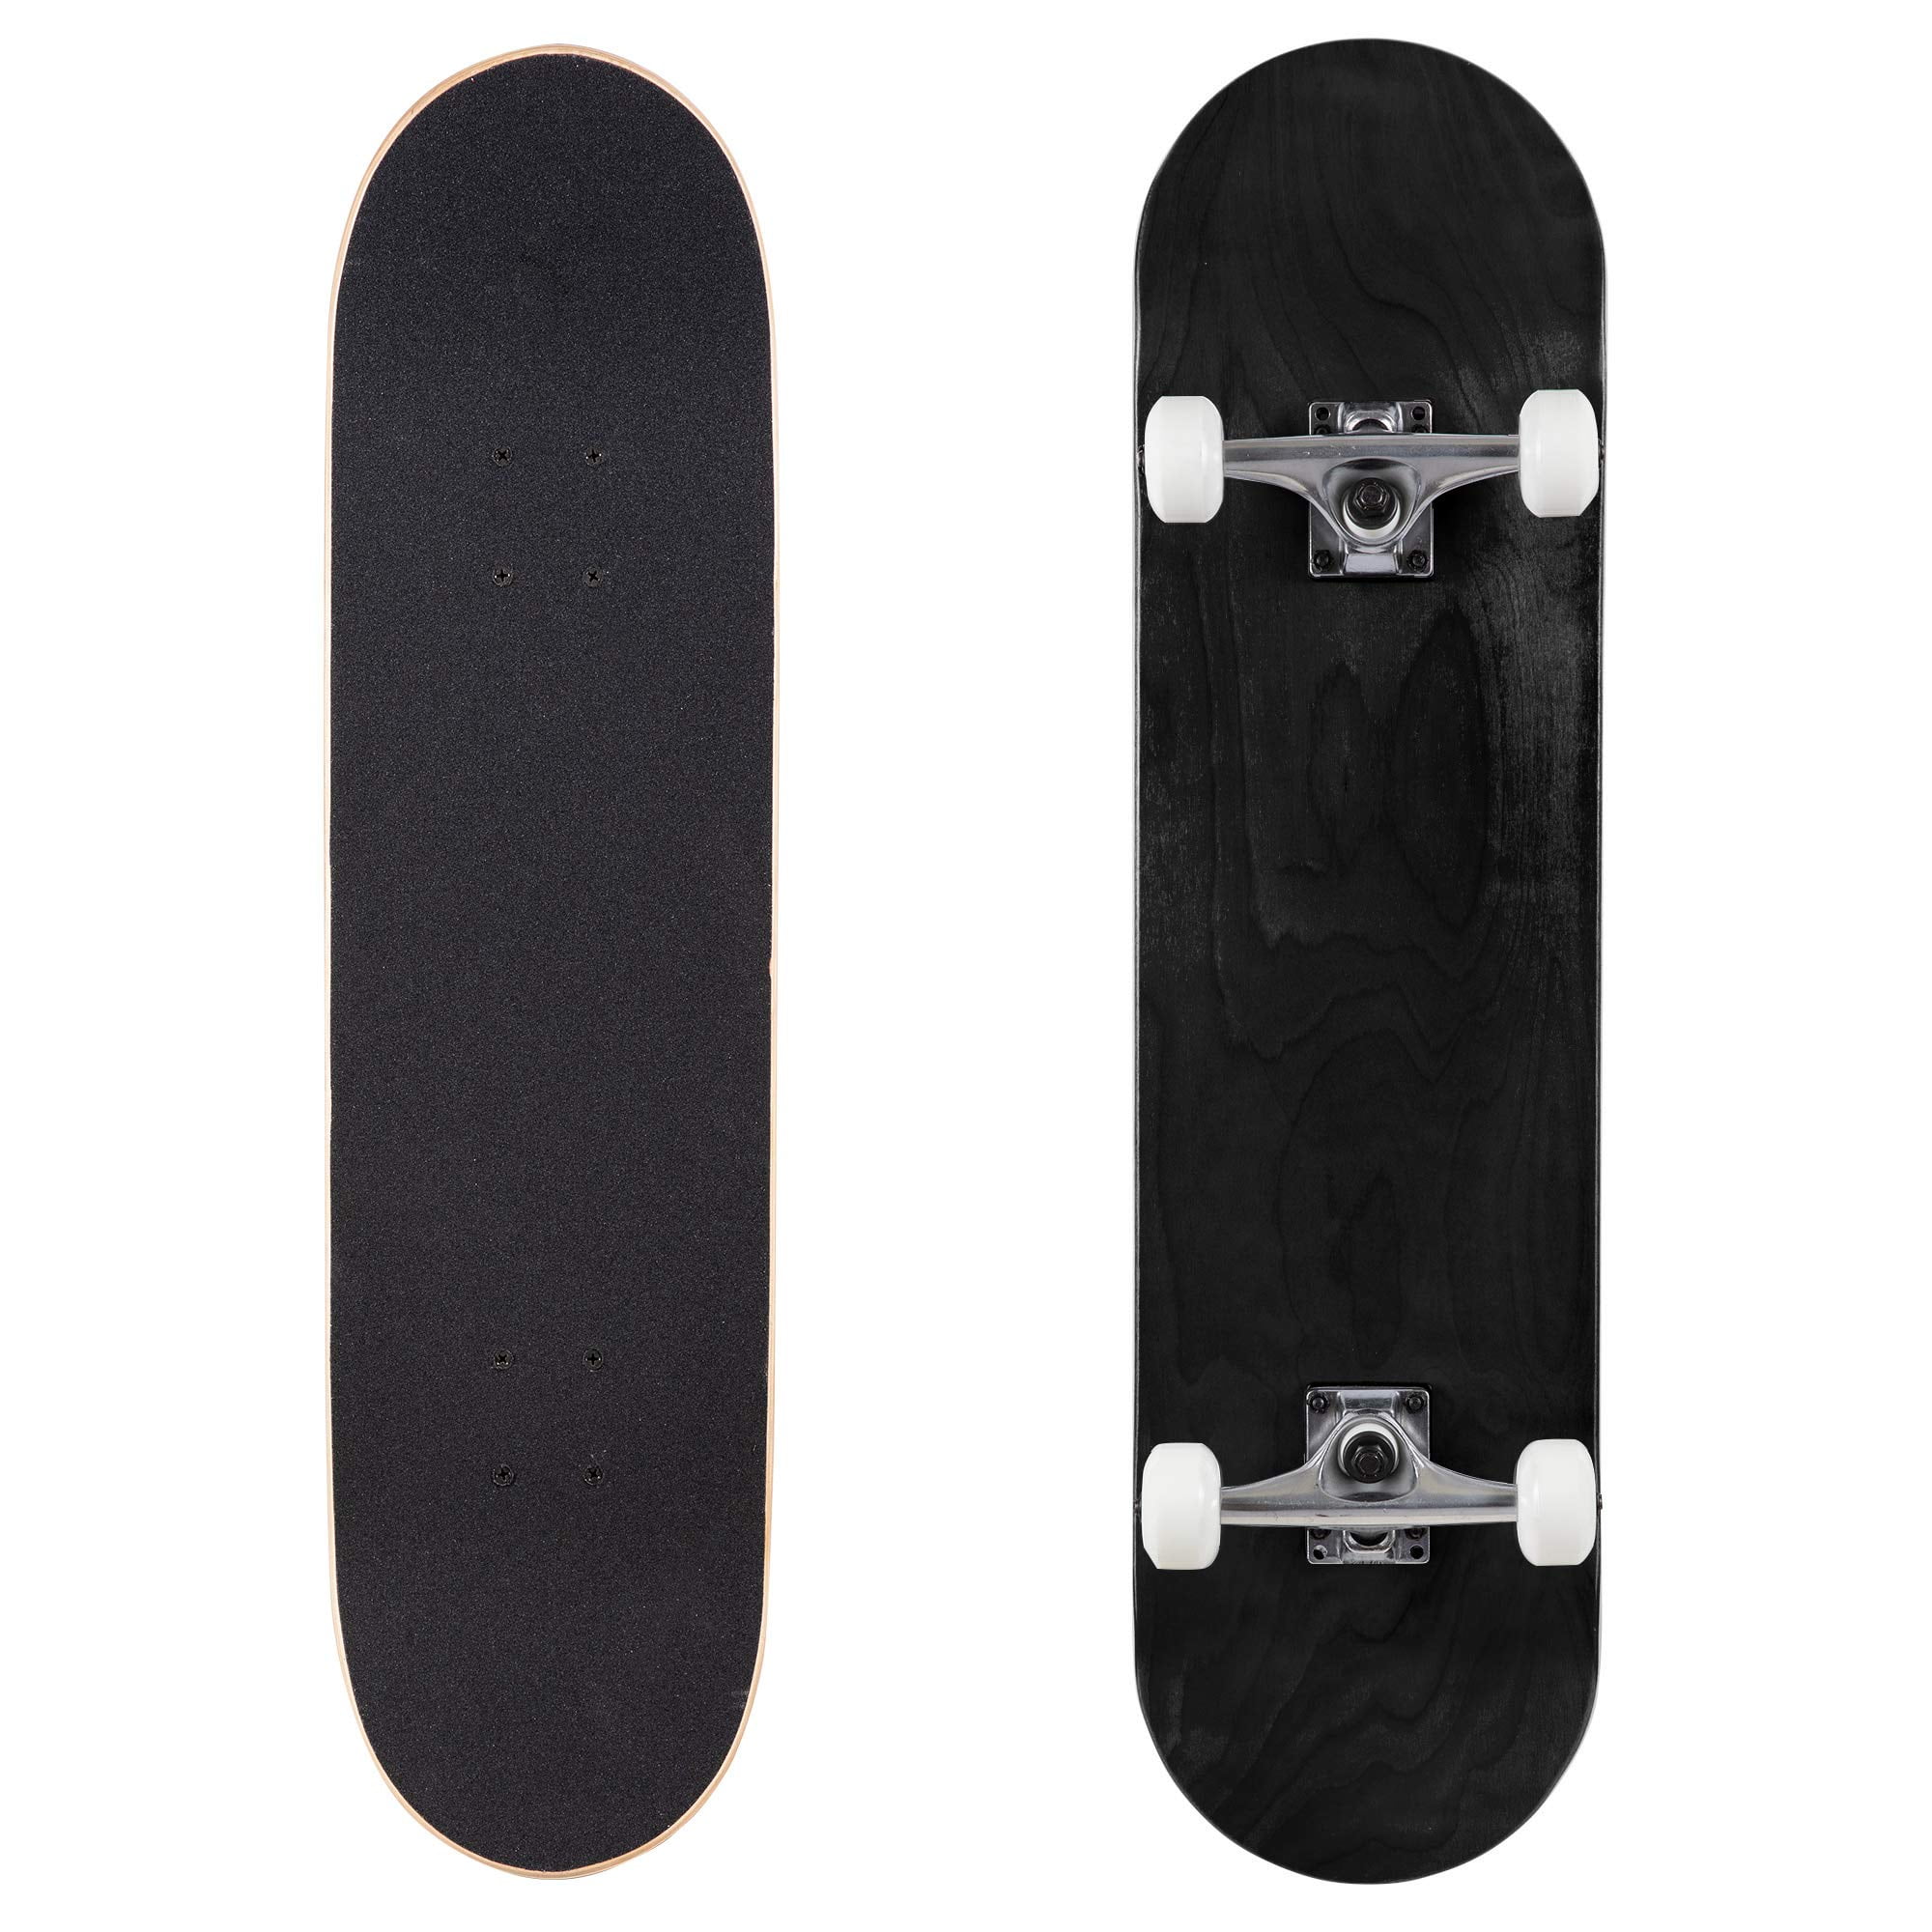 Cal 7 Complete 8.0 inch Skateboard Black) - Walmart.com